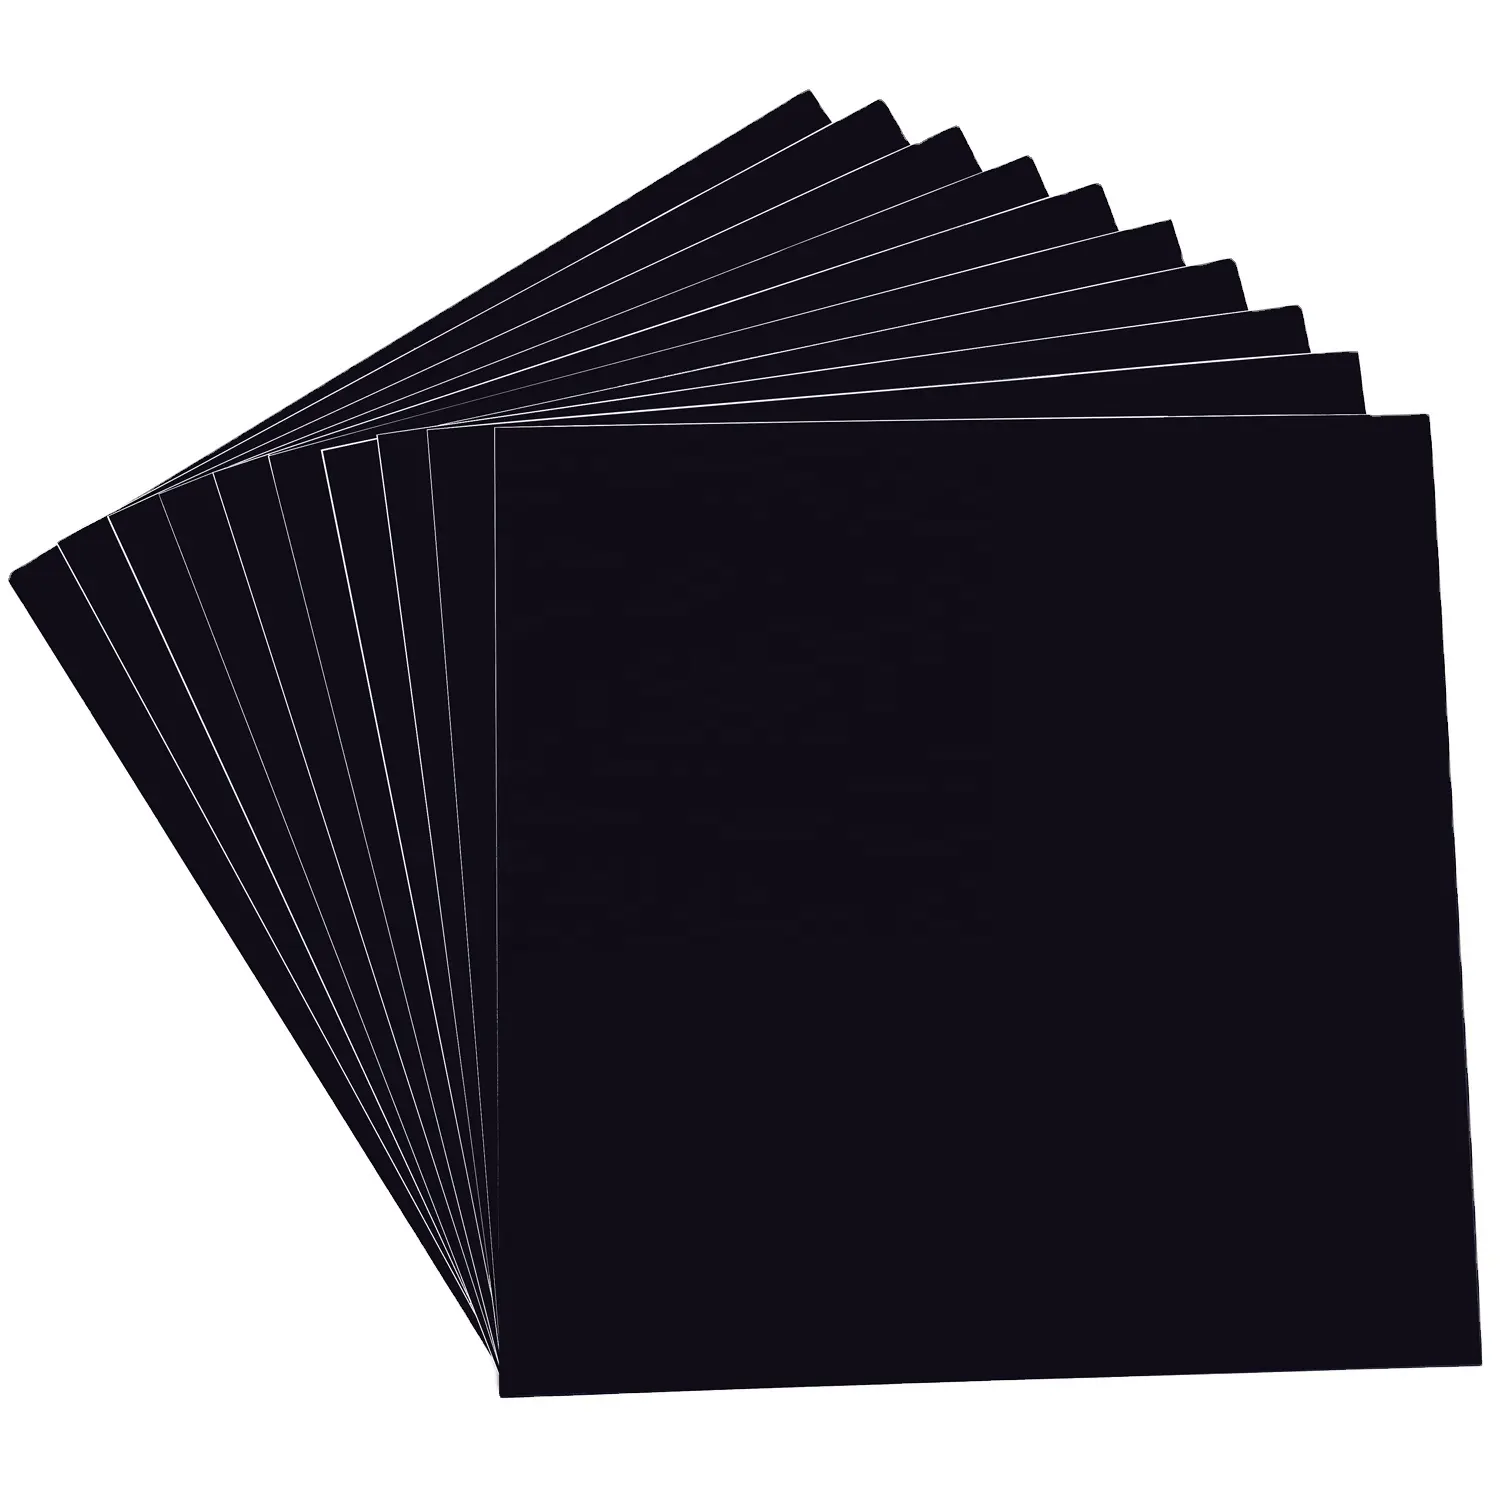 Matte black vinyl sheet 10 pack 12 x12 permanent adhesive craft decor sheets for Cricut, Silhouette, Cameo